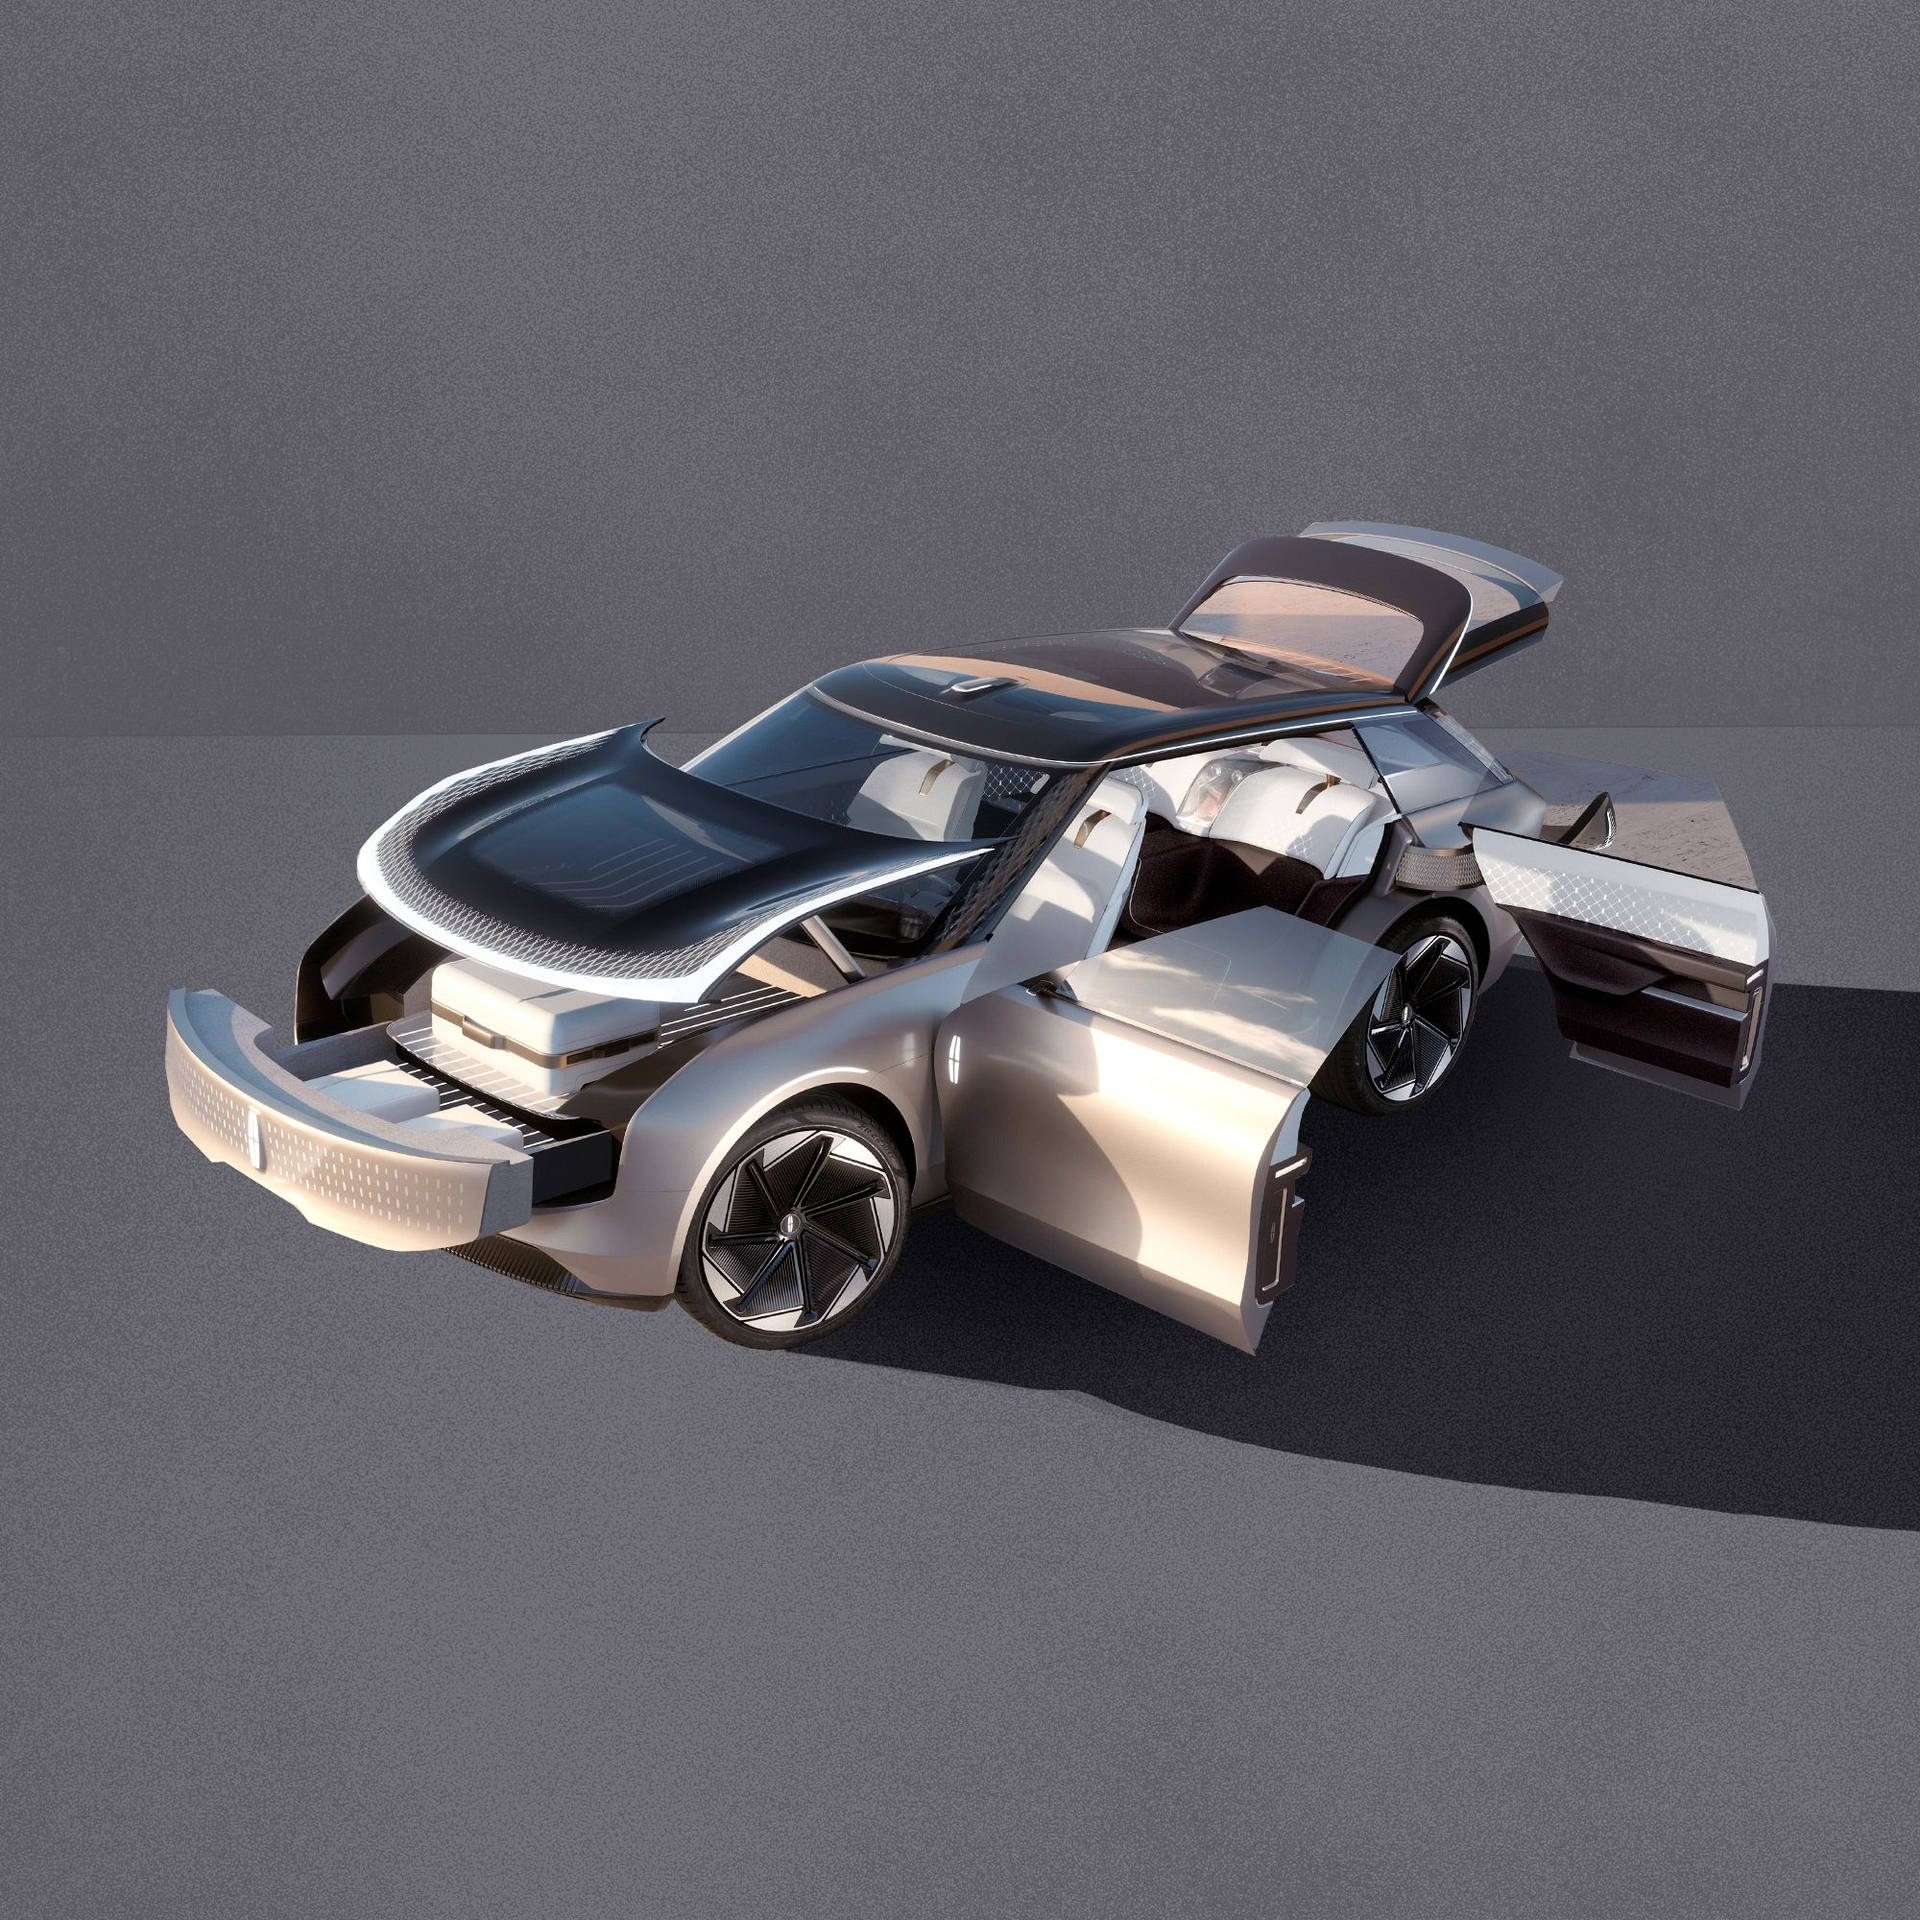 Futuristic Concept Lincoln Car 3d Model Wallpaper